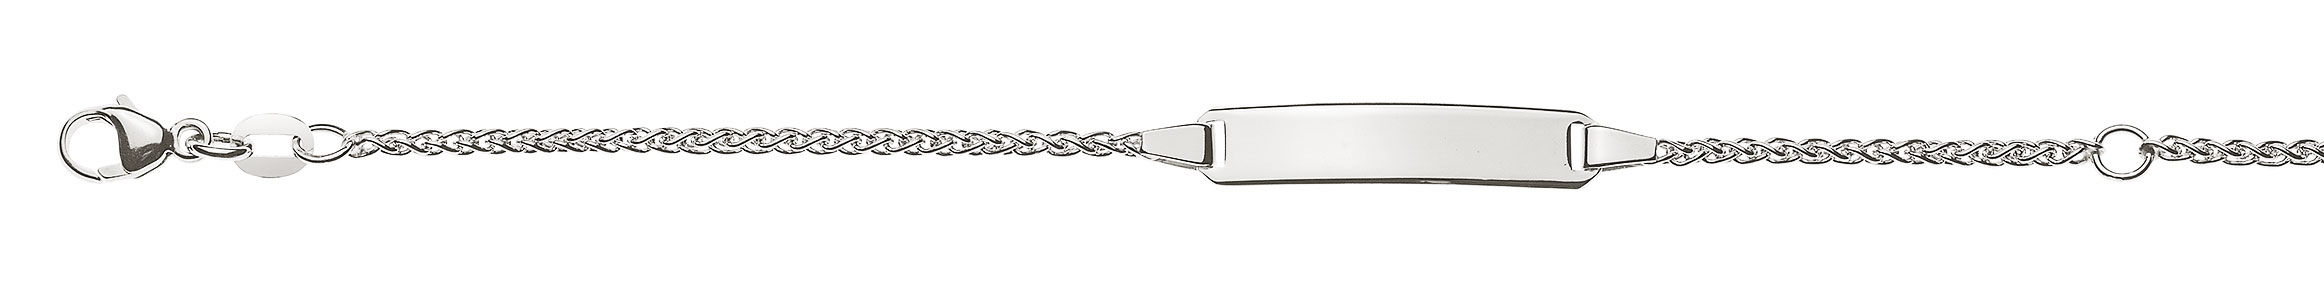 AURONOS Prestige ID-Bracelet en or blanc 18k Chaîne à torsades 14cm